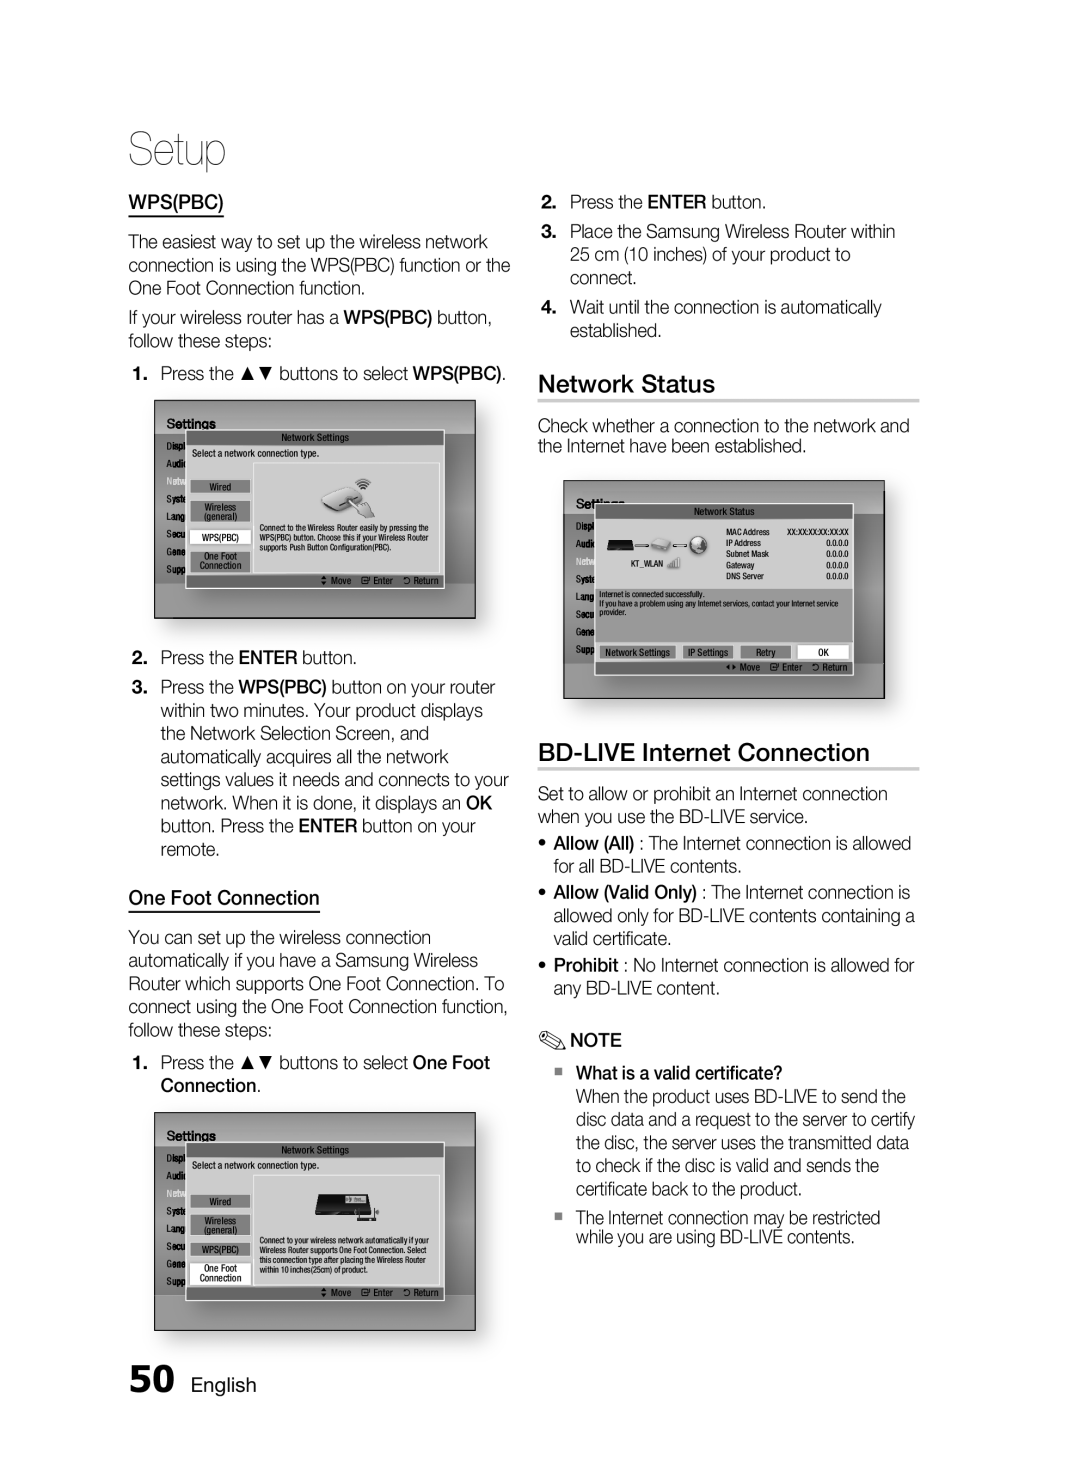 Samsung HW-D7000 user manual Network Status, BD-LIVEInternet Connection, Setup, Wpspbc, One Foot Connection, English 